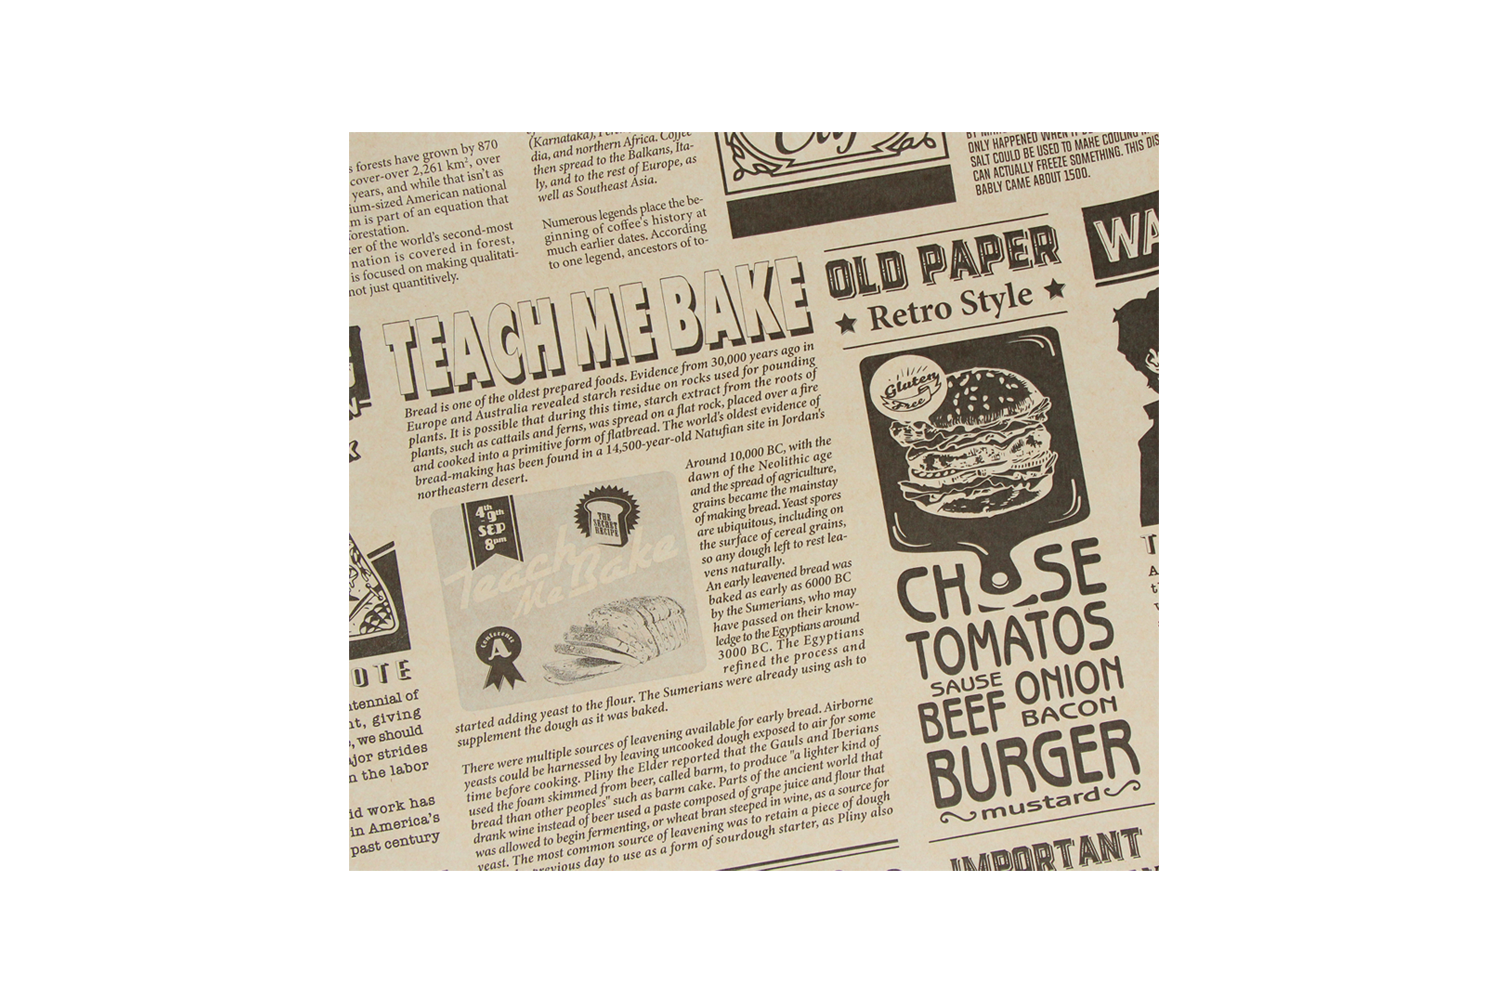 Greaseproof paper 33x30cm hamburger sheets FSC®Mix newspaper brown